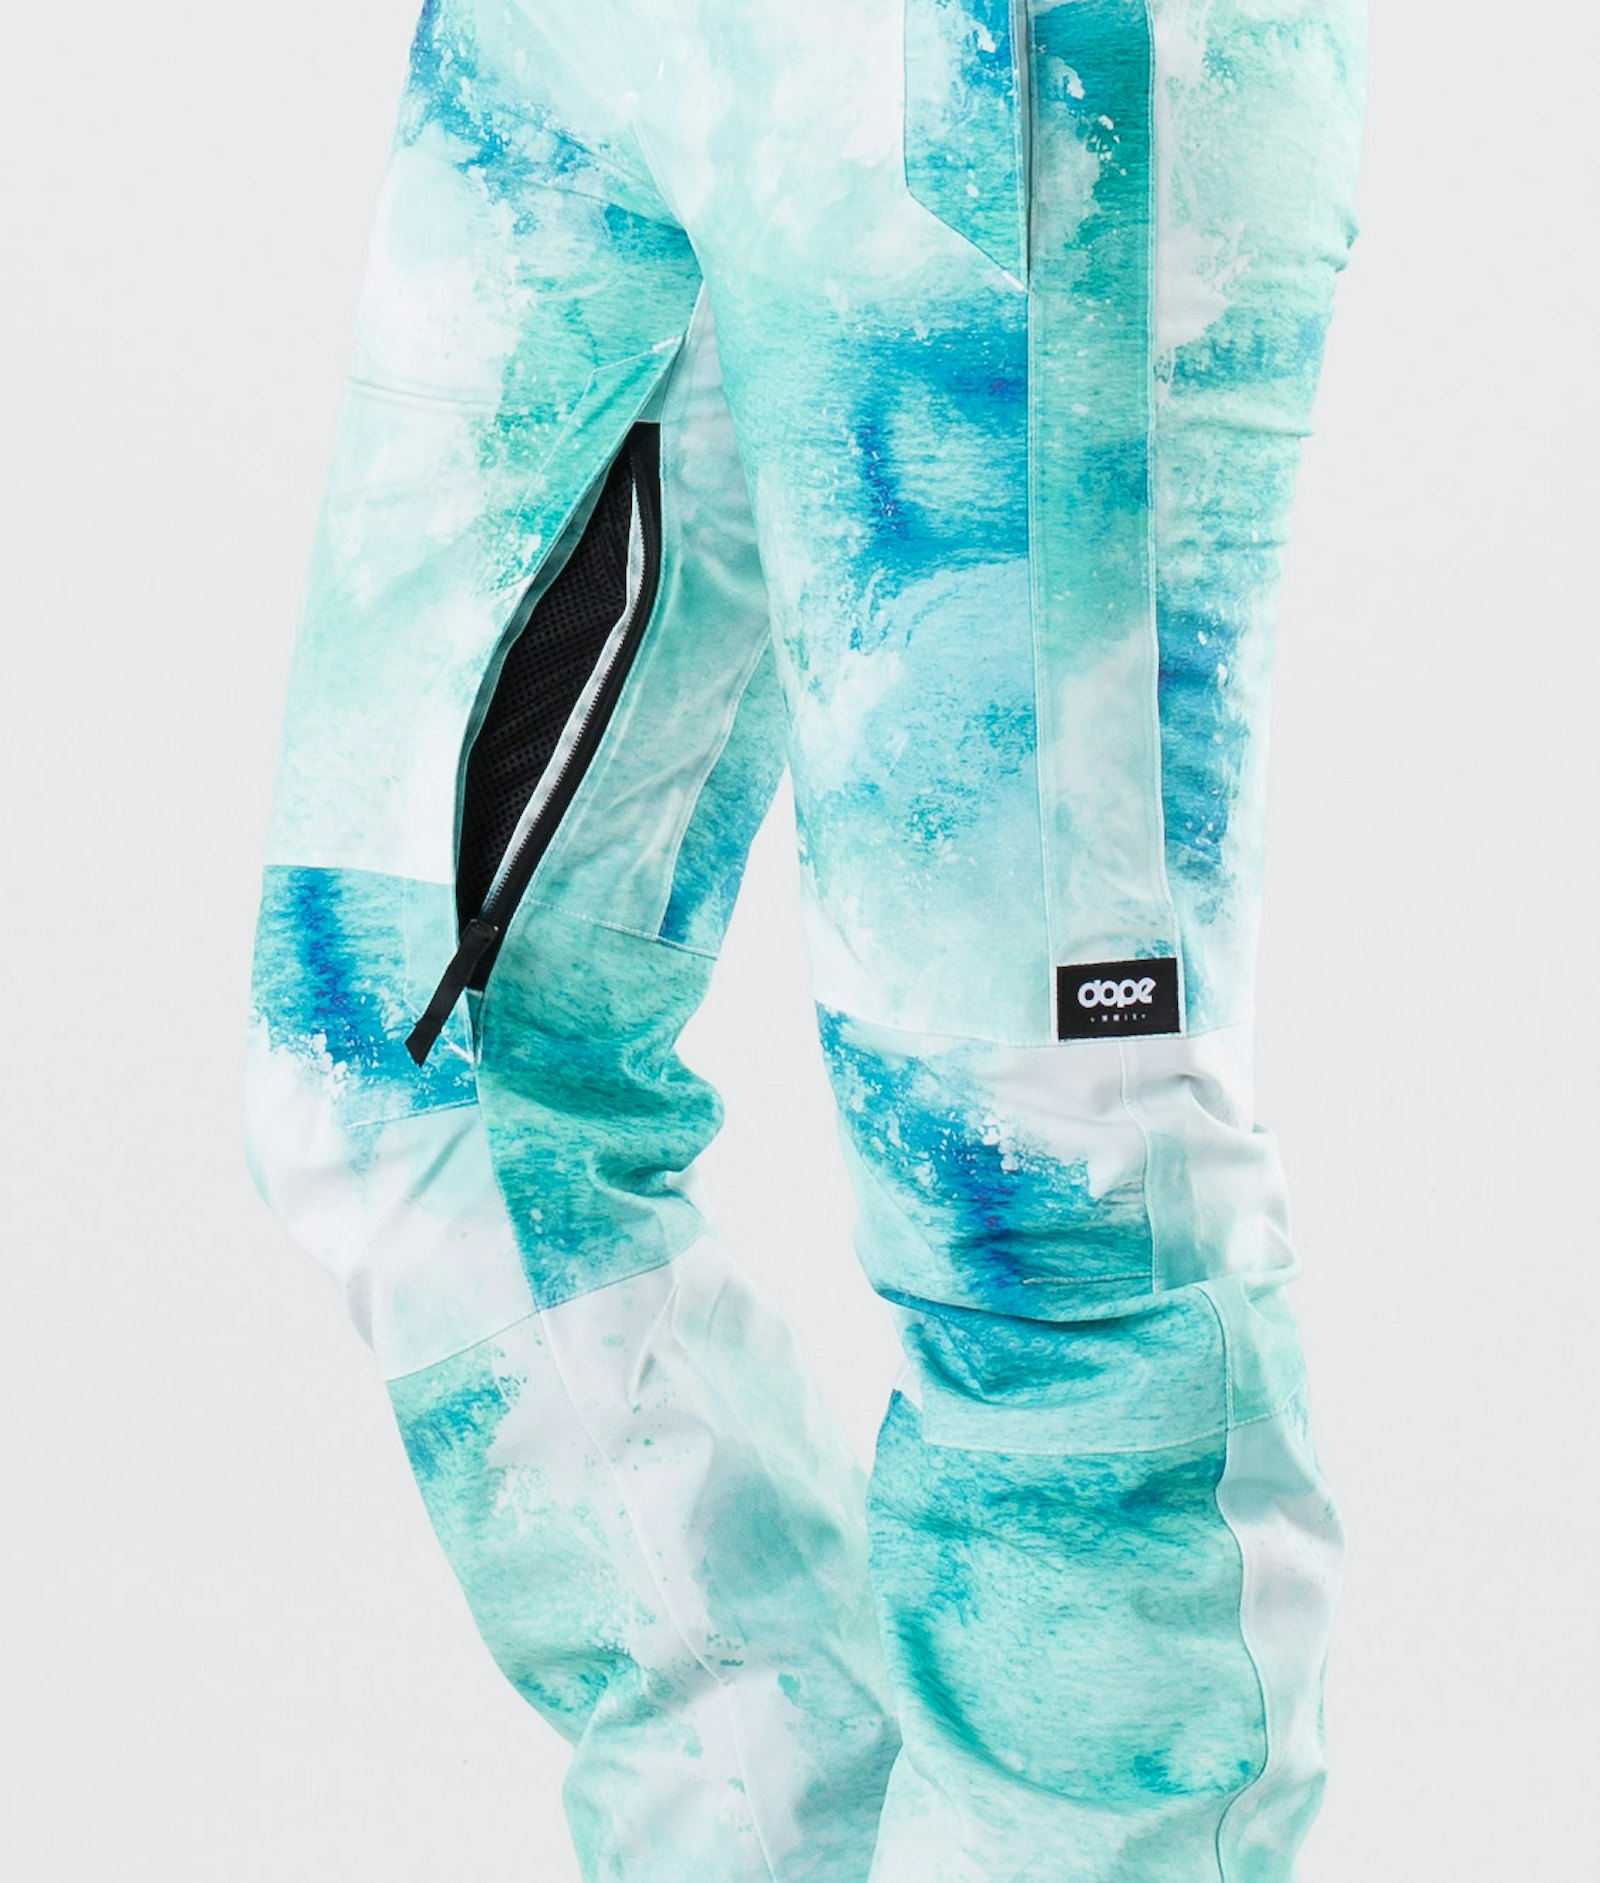 Dope Con W 2019 Pantalon de Snowboard Femme Water White